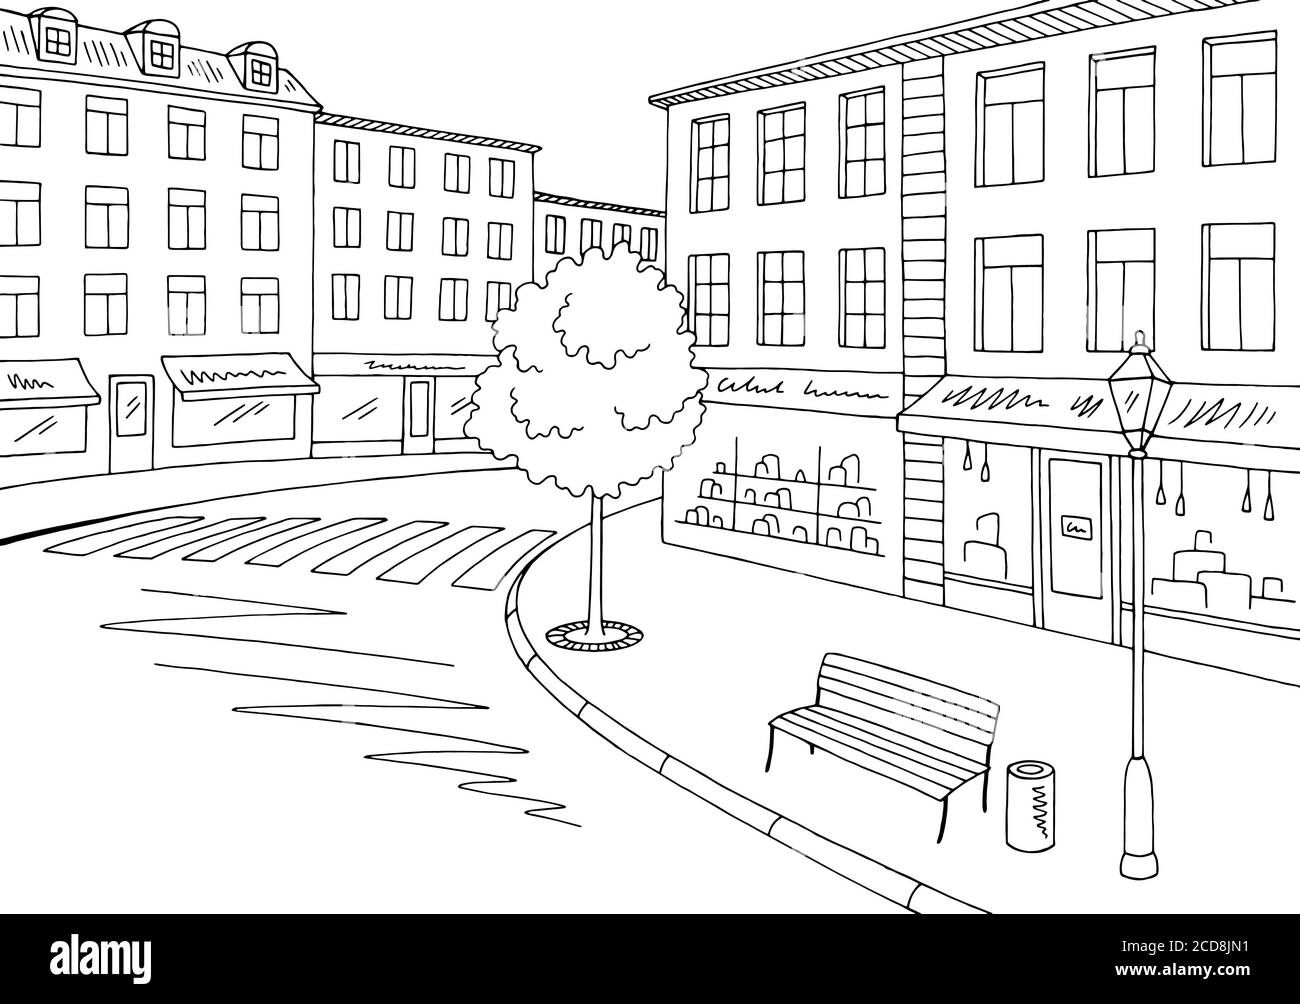 Straße Straße Grafik schwarz weiß Stadt Landschaft Skizze Illustration Vektor Stock Vektor